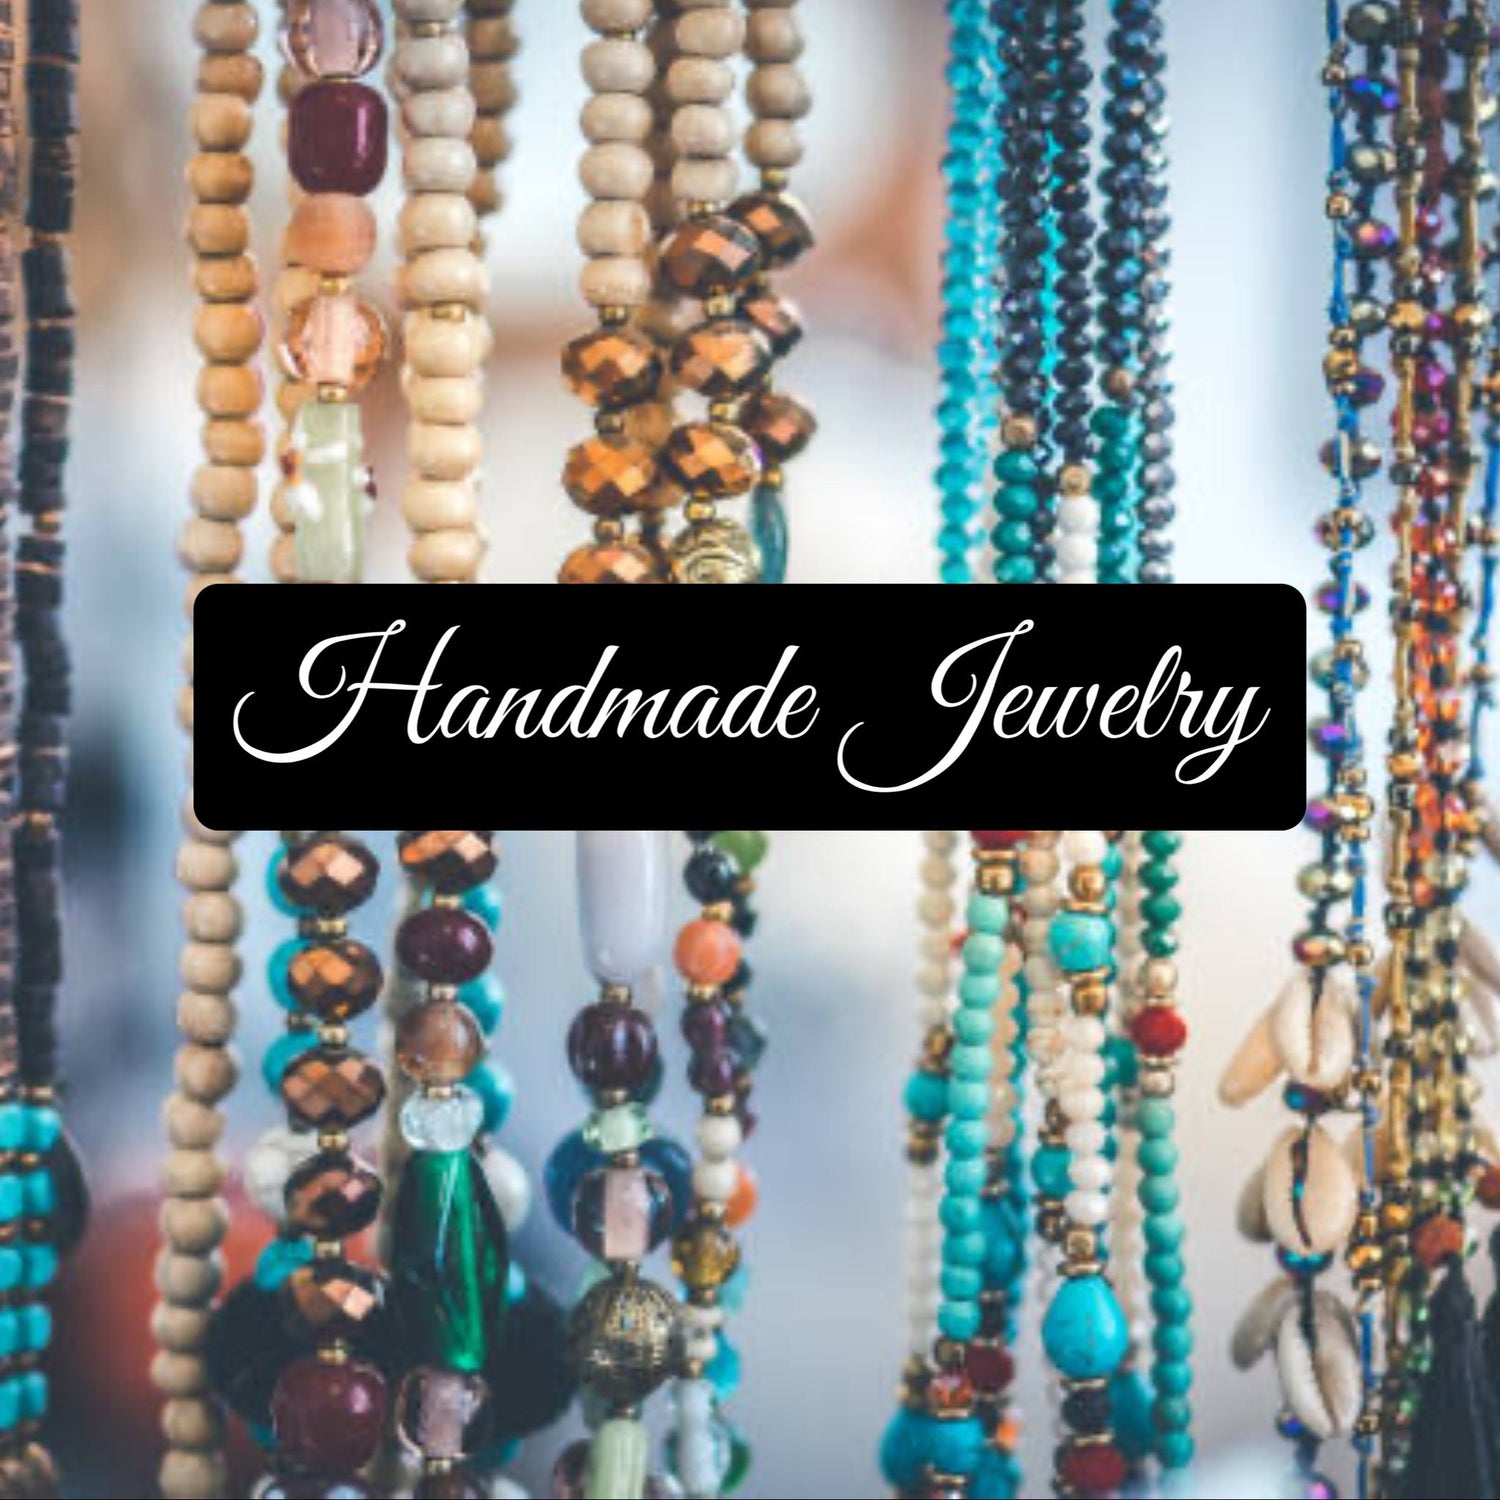 Handmade & Handcrafted Jewelry